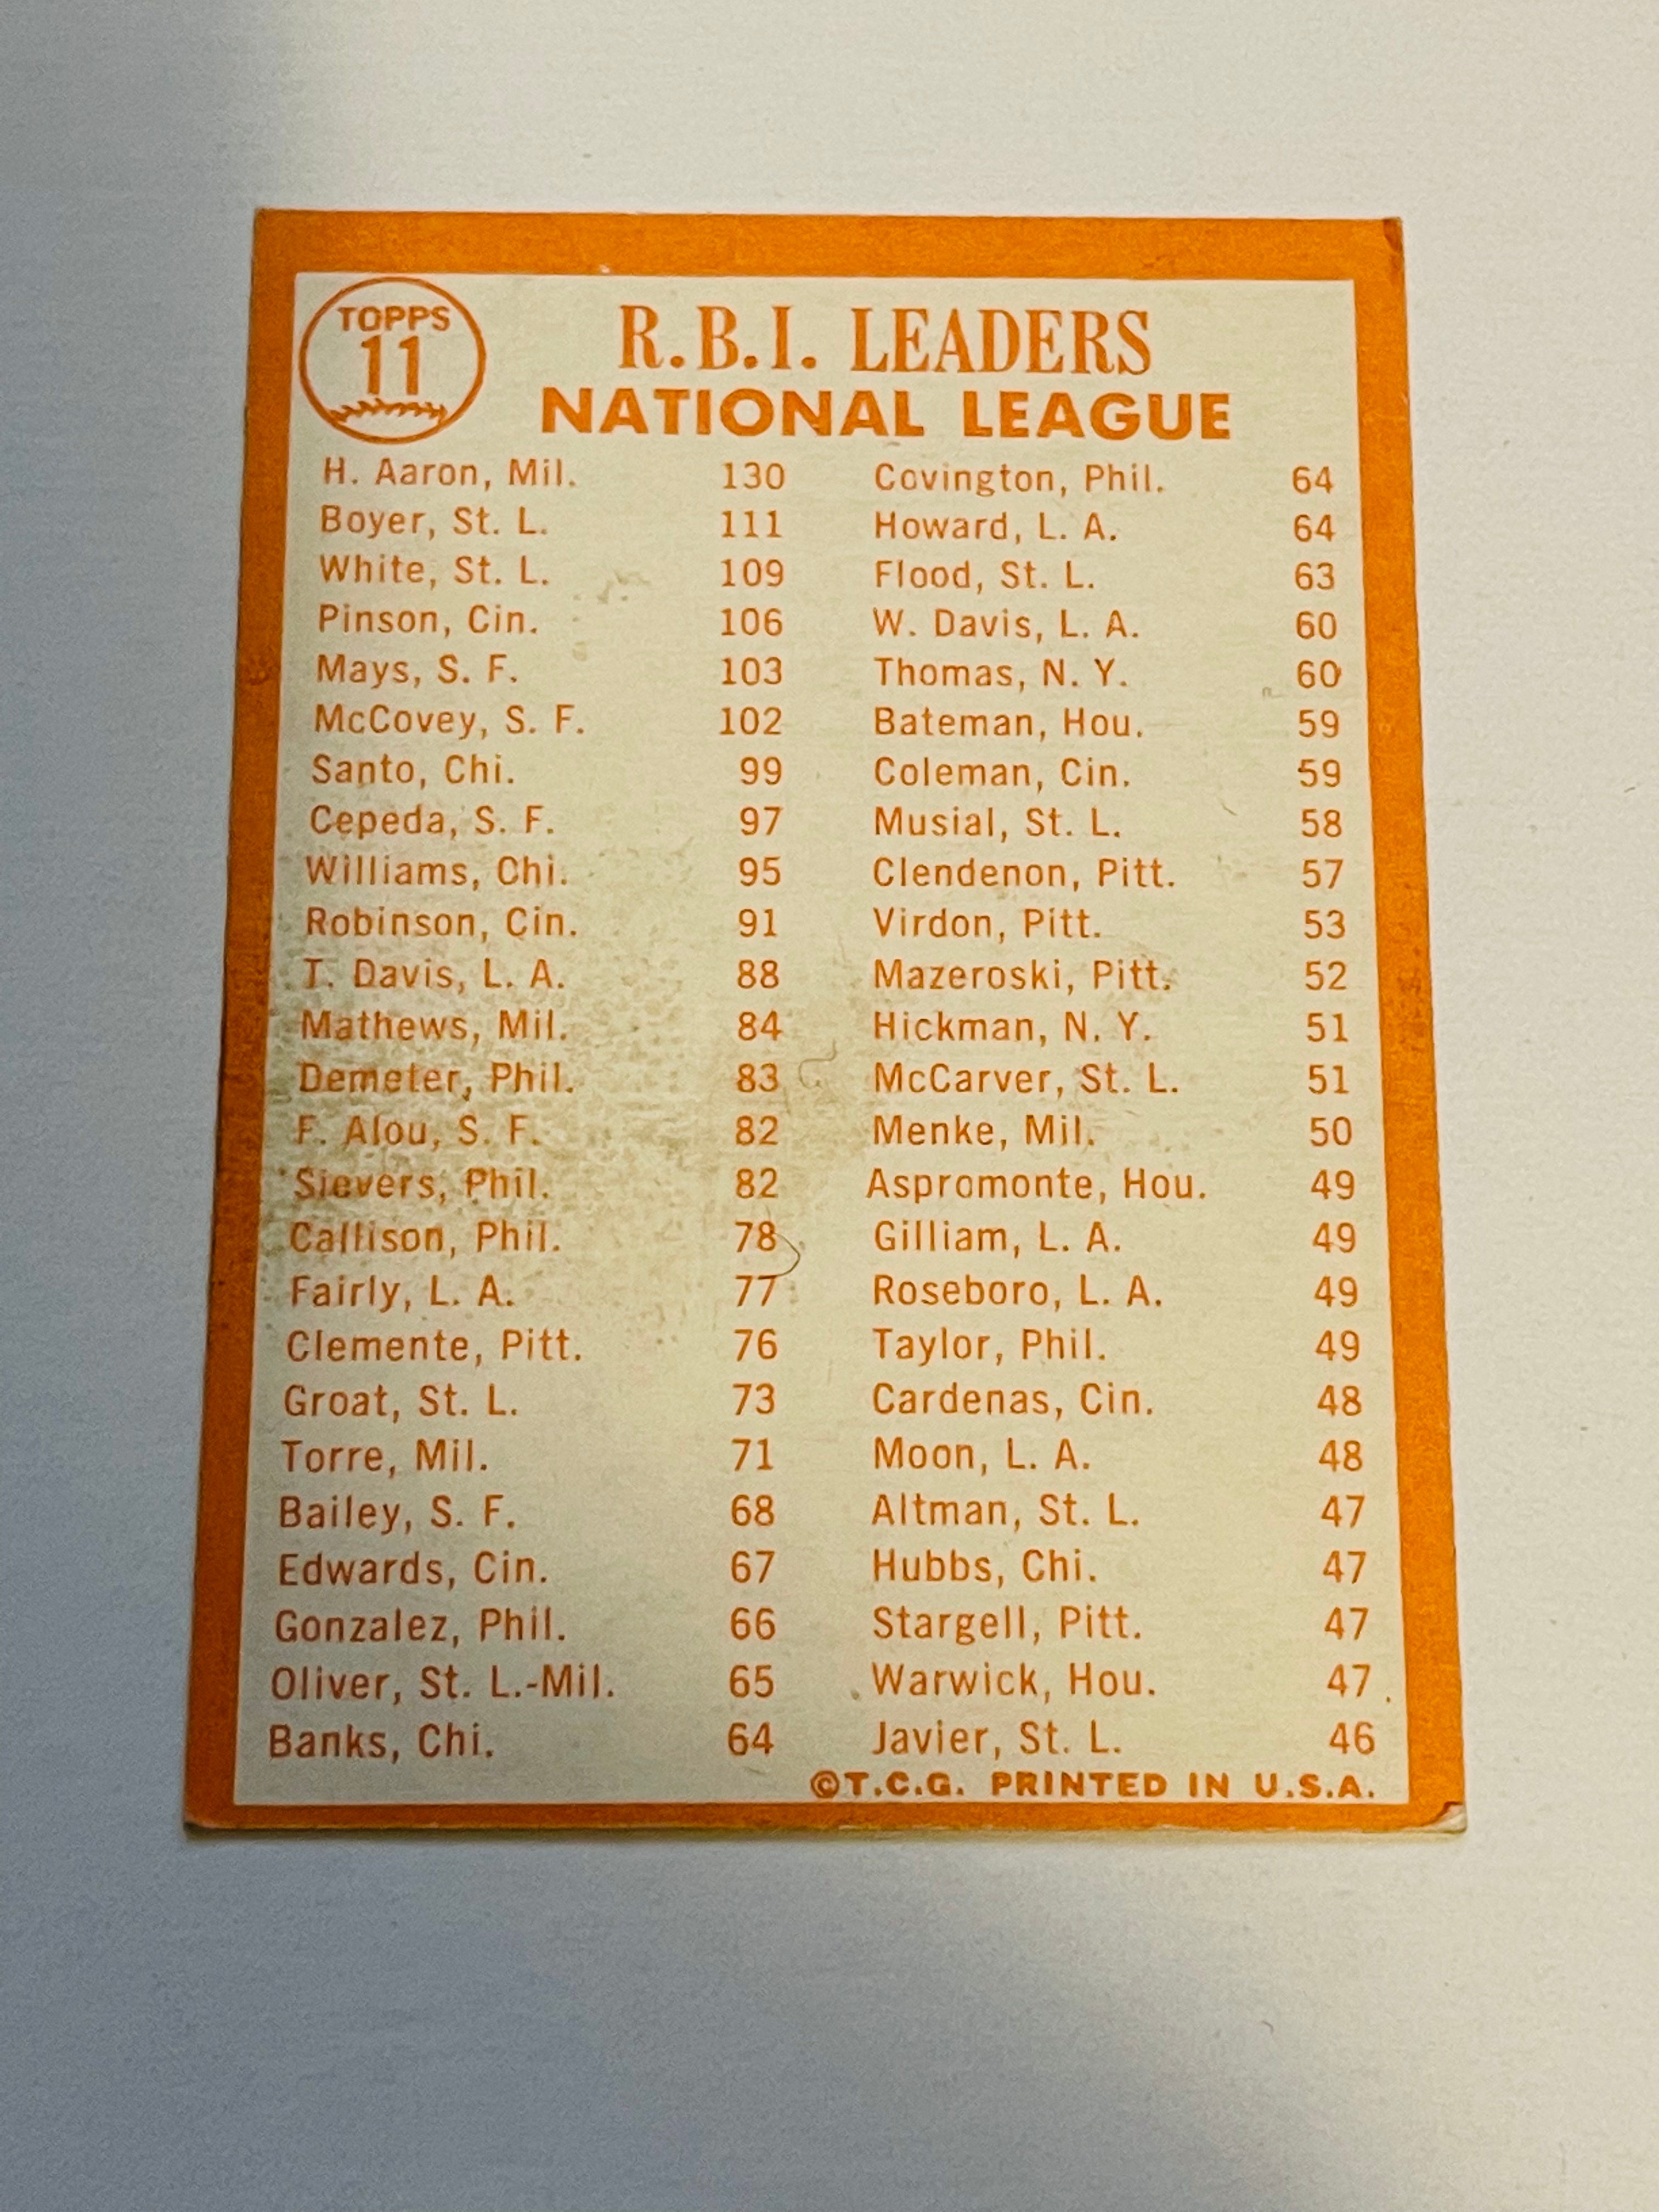 Hank Aaron RBI leaders Topps high grade baseball card 1964